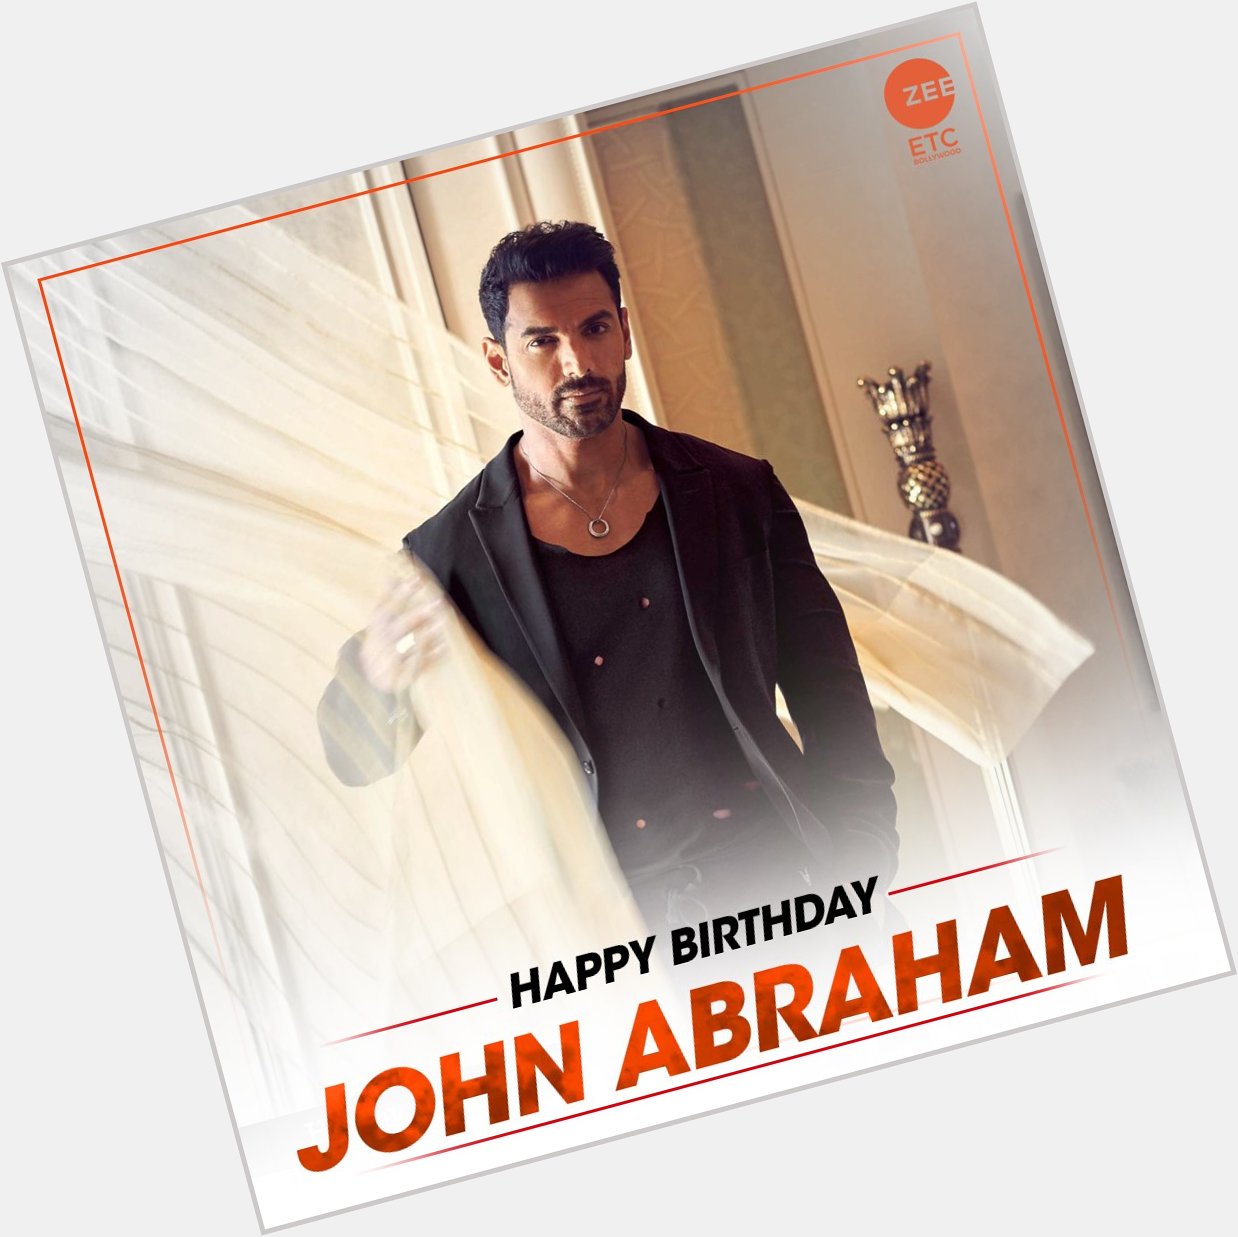 Here\s wishing the handsome hunk John Abraham a very happy birthday! 

TheJohnAbraham 